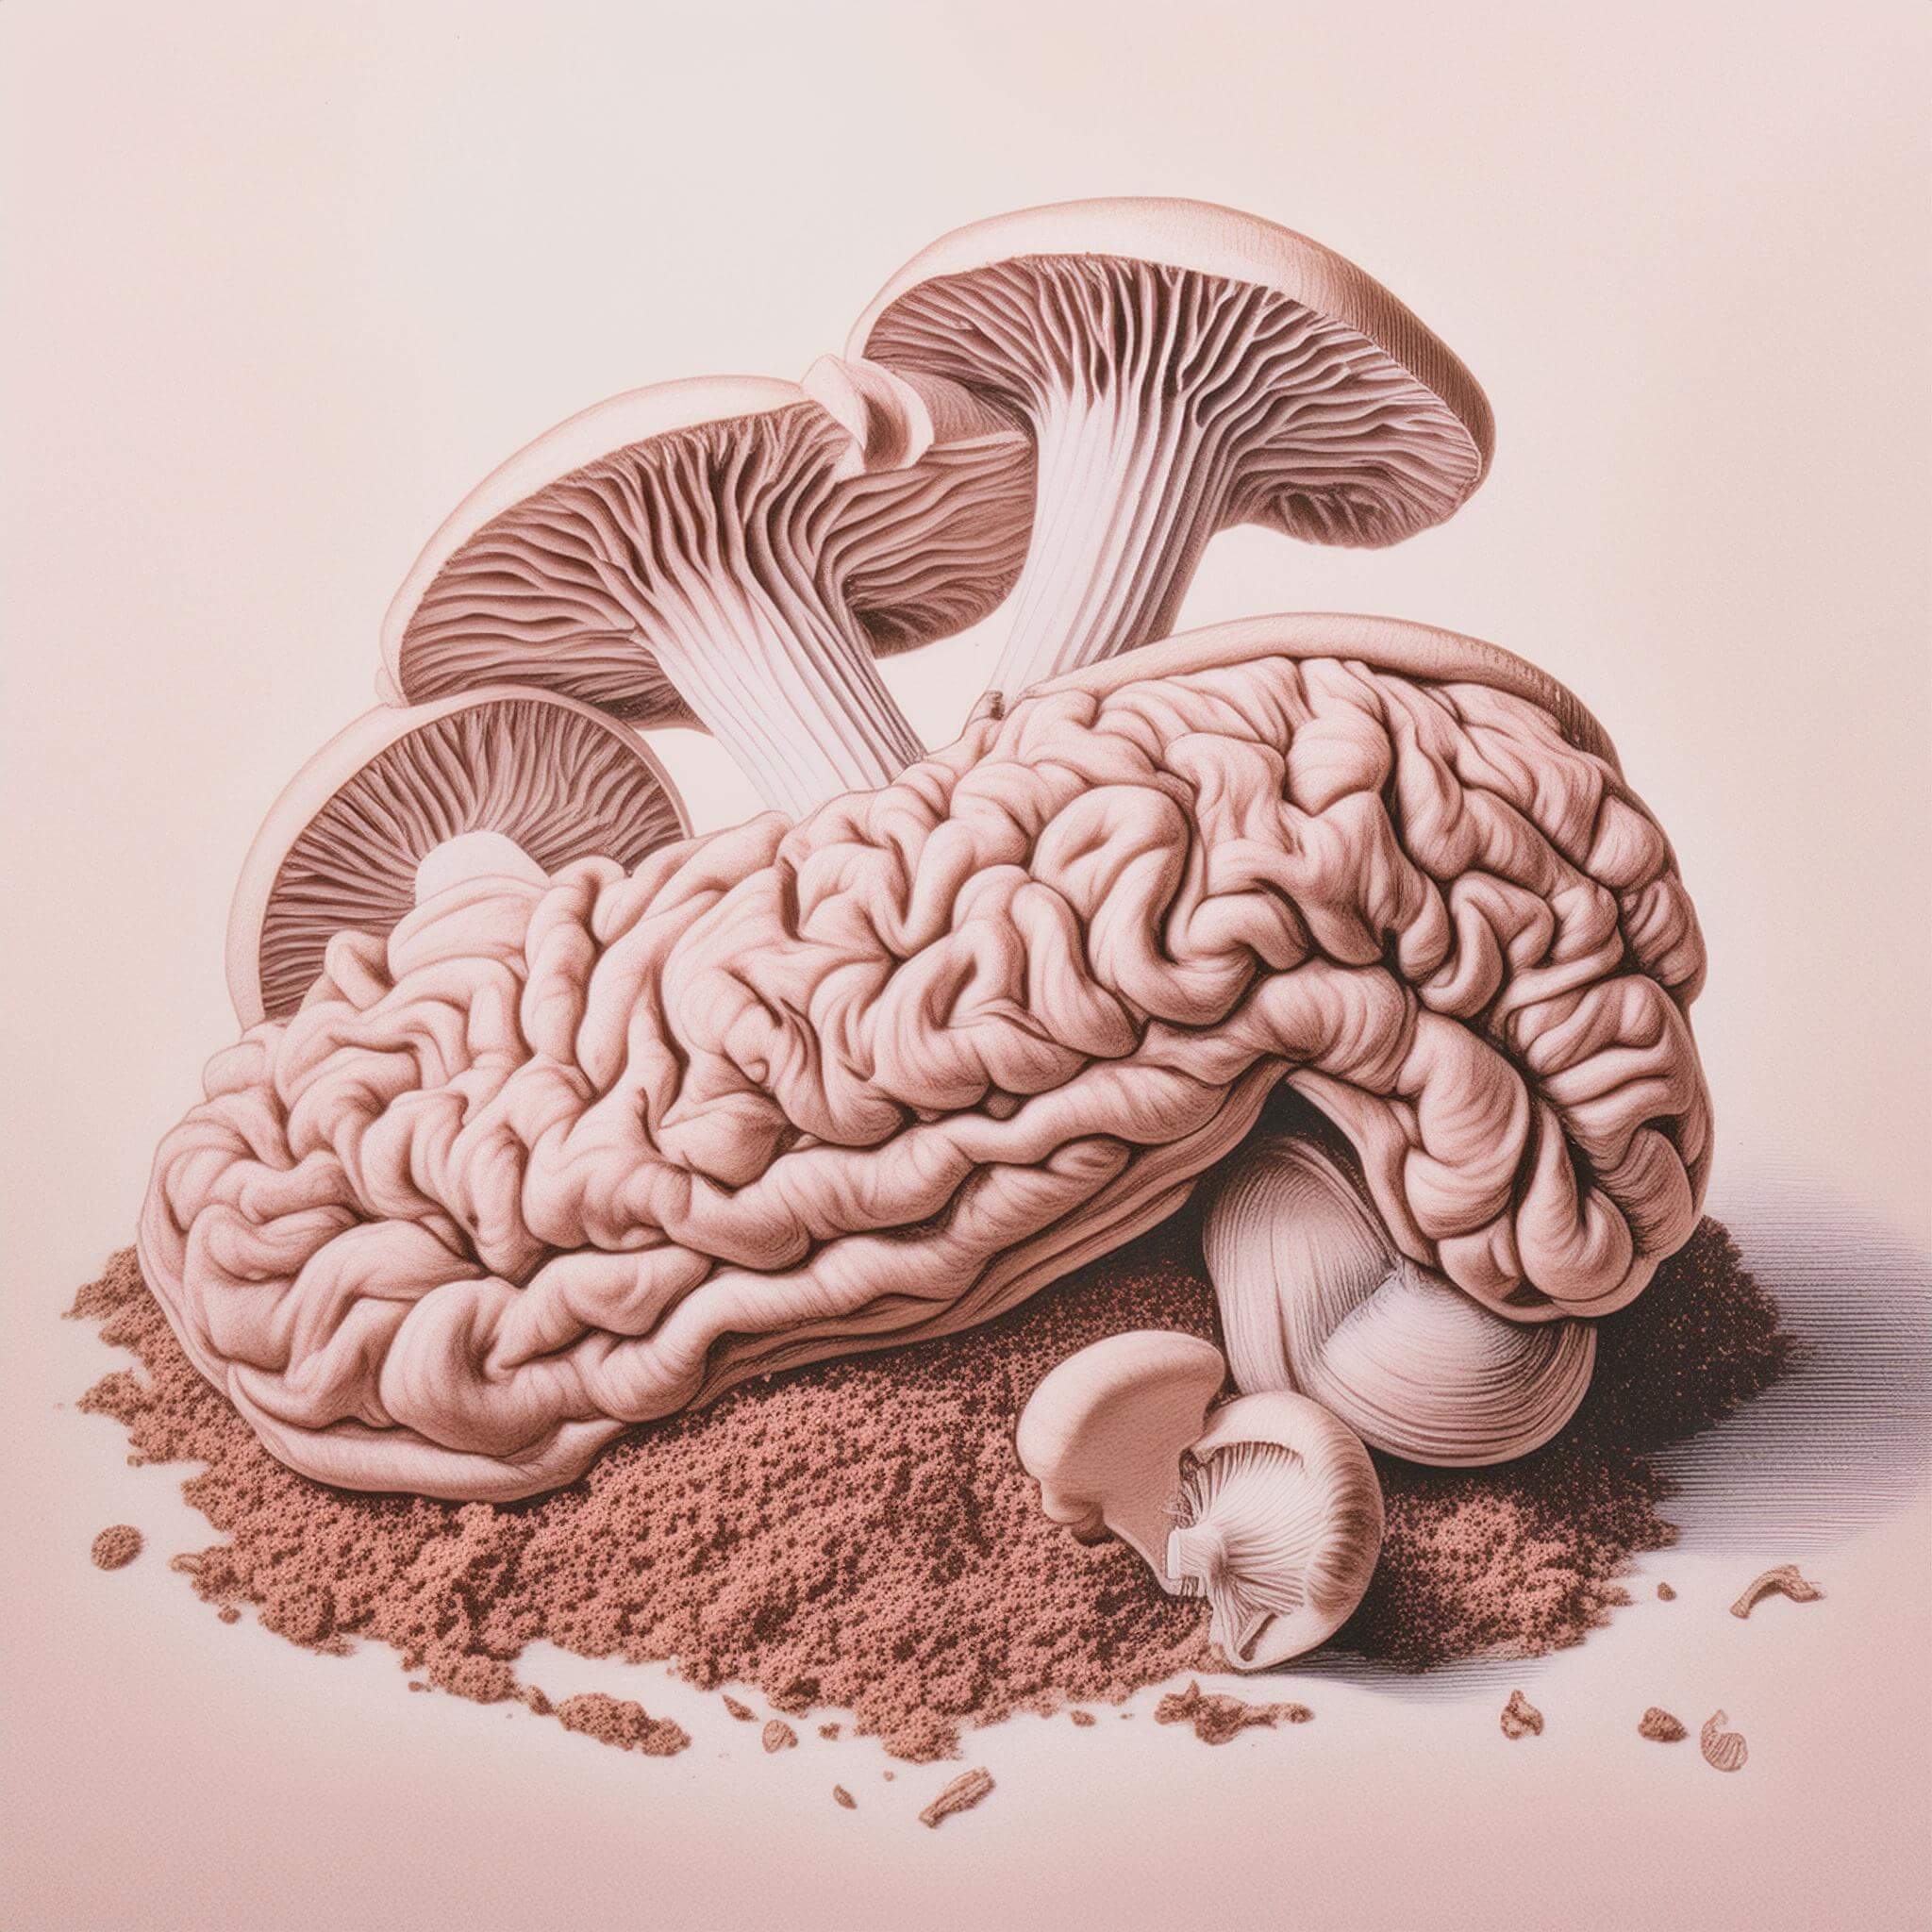 drawing of mushrooms and mushroom powder illustrating mushrooms for gut health